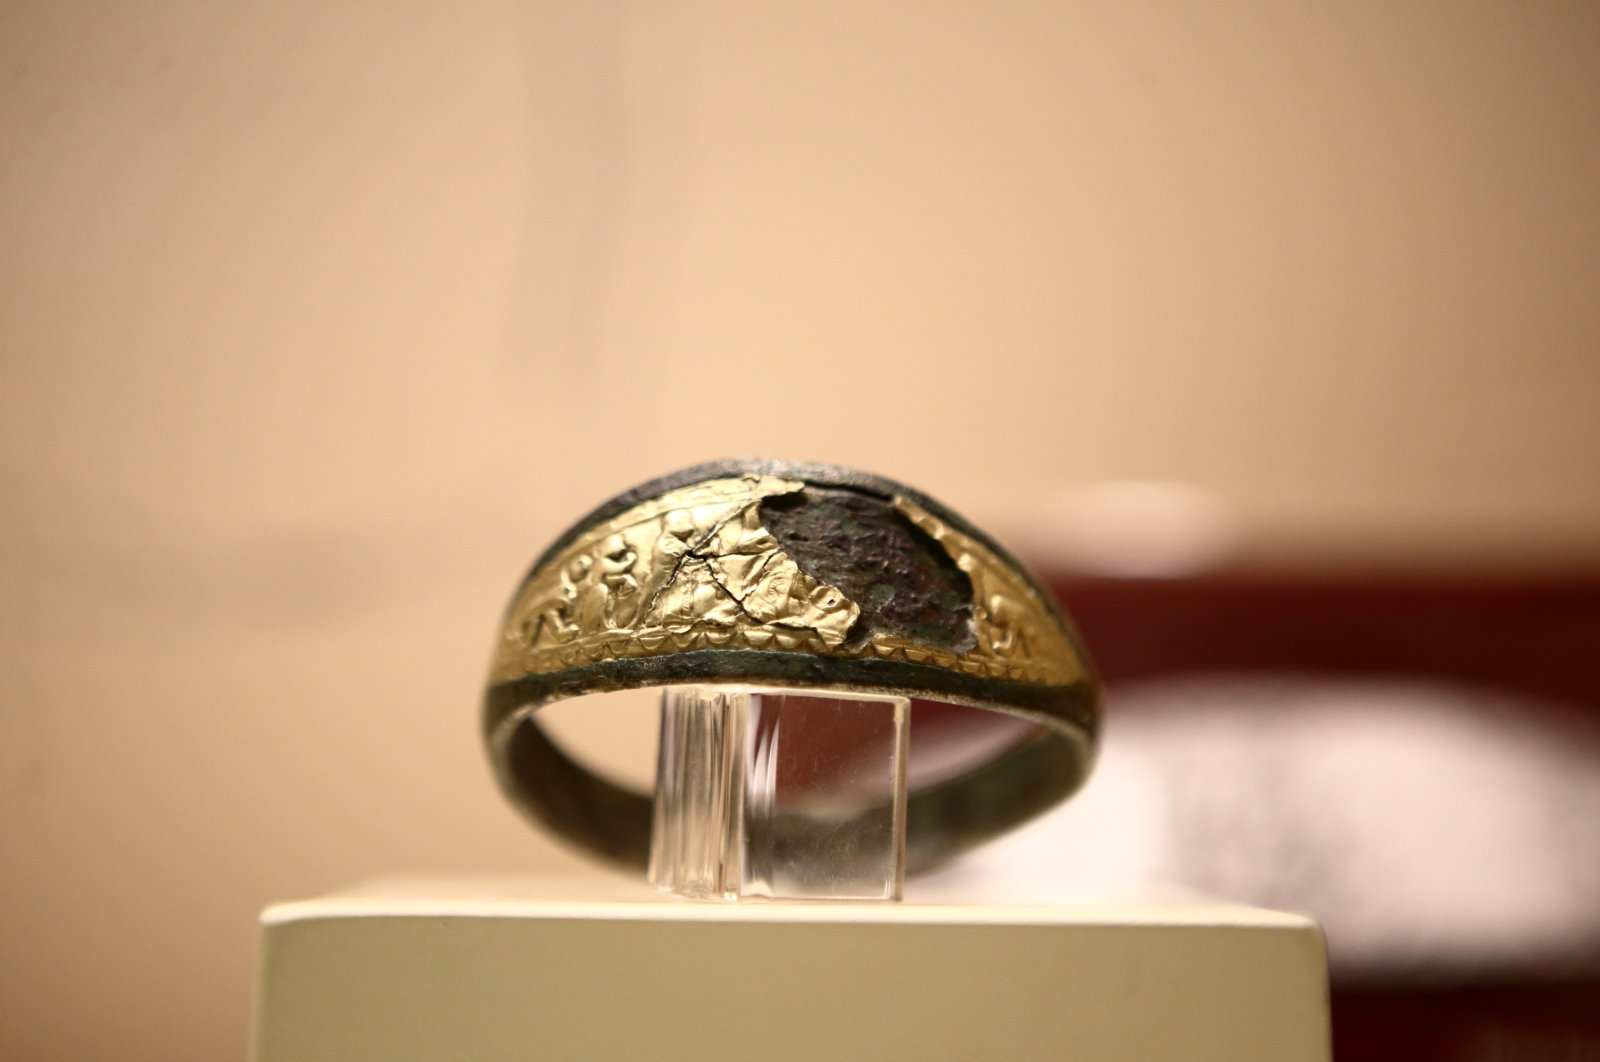 <p class="font_7"><a href="https://www.dailysabah.com/life/history/farmer-discovers-rare-hittite-era-bracelet-in-turkeys-corum"><u>Farmer discovers rare Hittite-era bracelet in Turkey's Çorum</u></a></p>